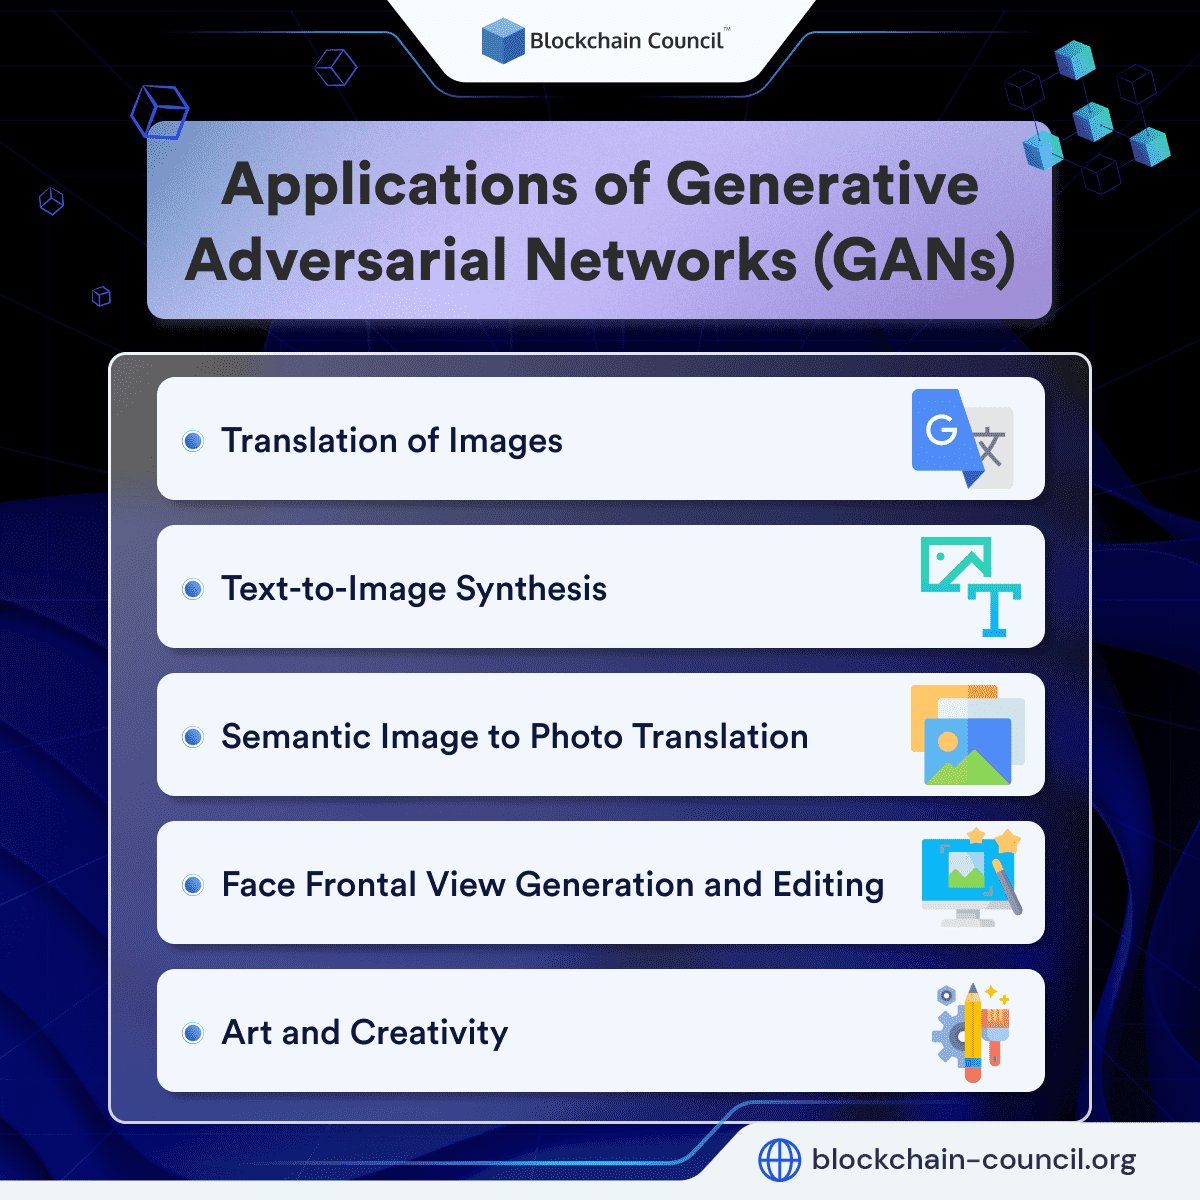 Applications of Generative Adversarial Networks (GANs)